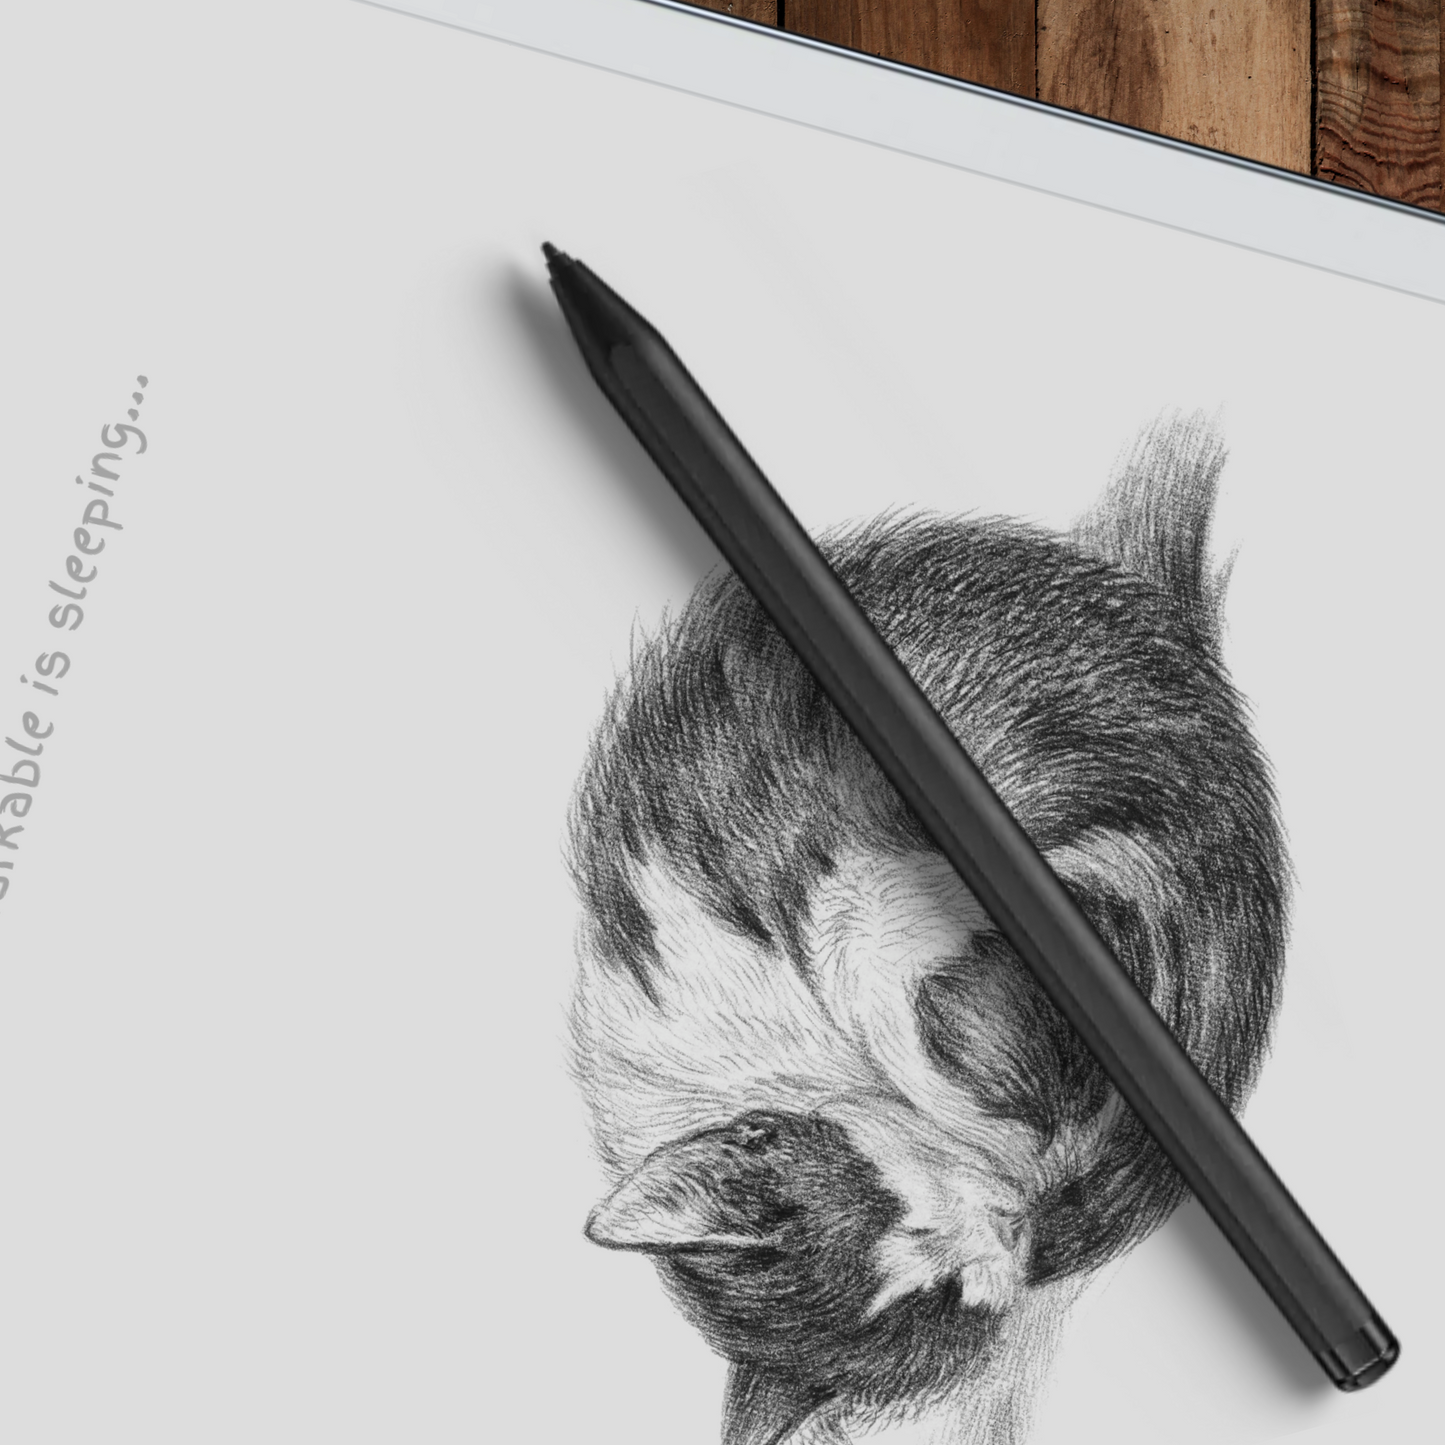 Remarkable 2 Sleep Screen & Notebook Cover Artwork - Hand-drawn Adorable Sleeping Cat